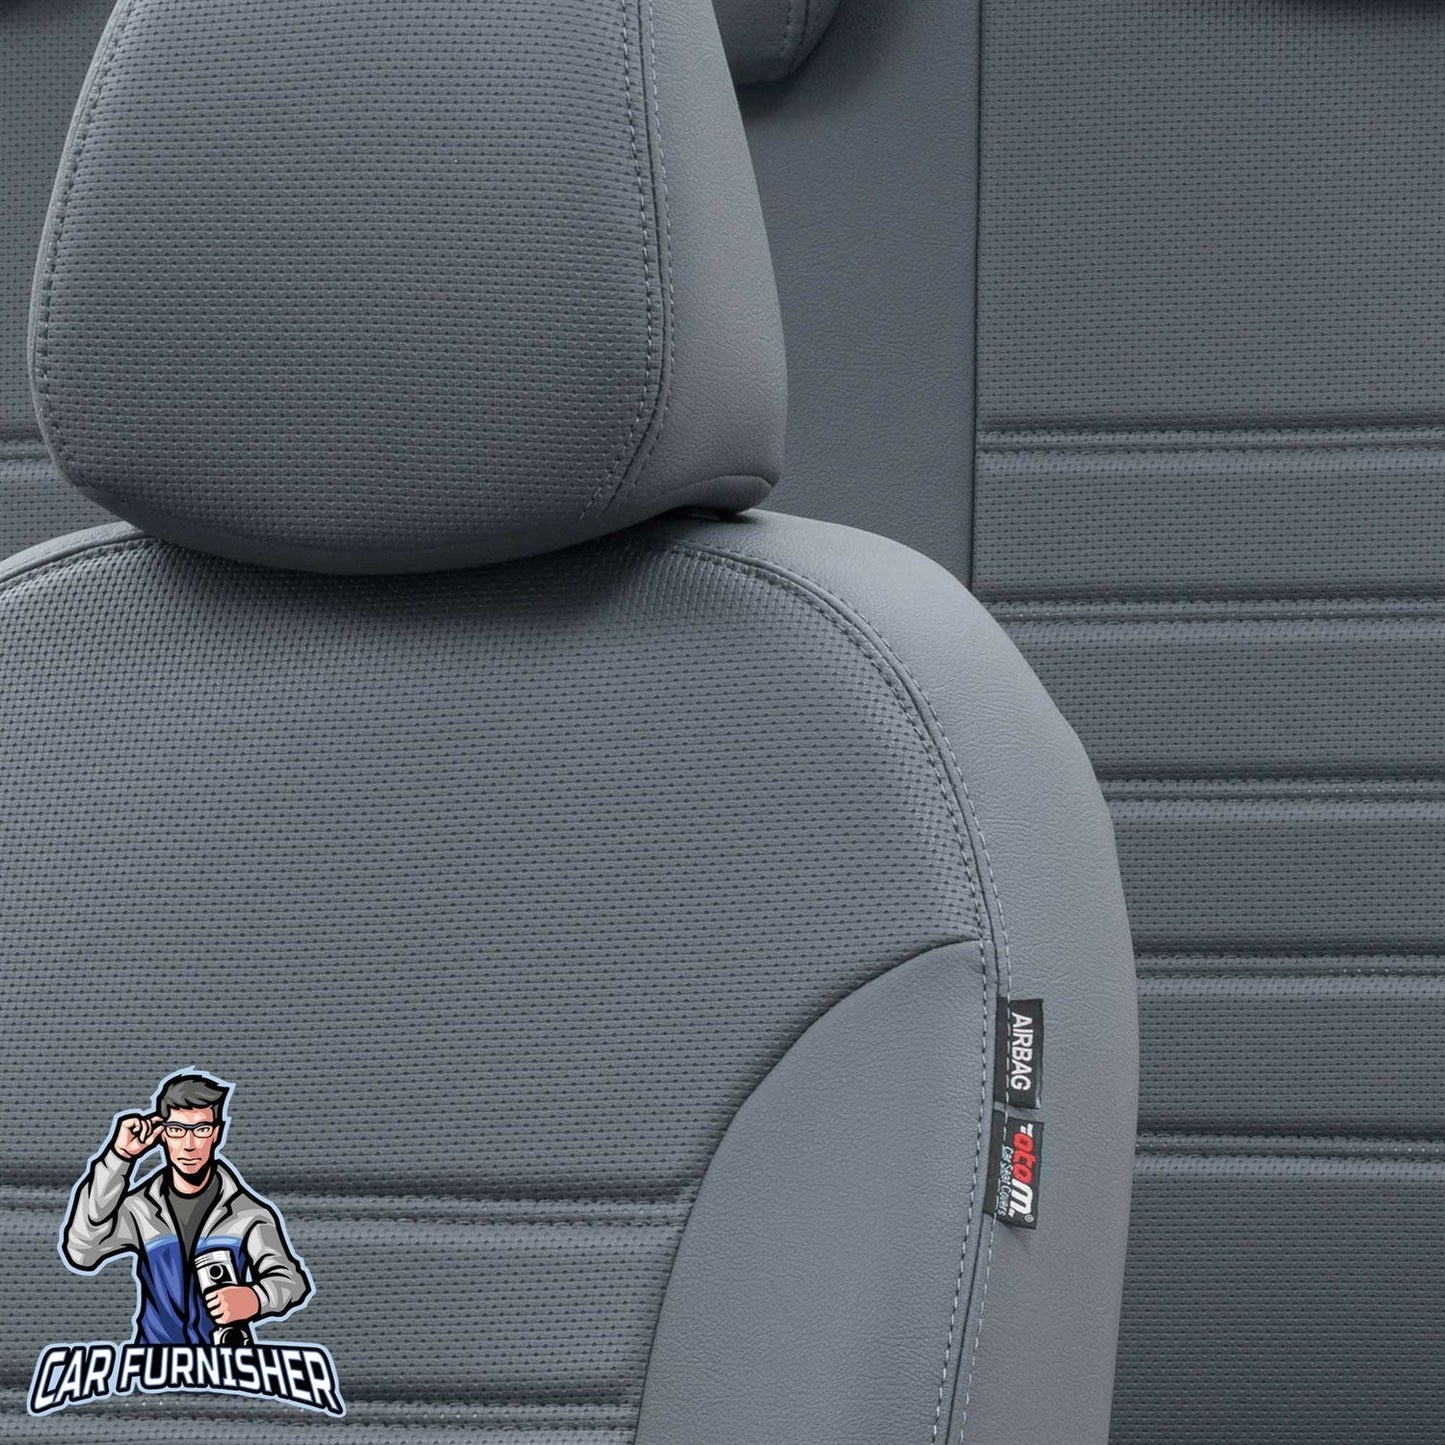 Suzuki Vitara Seat Covers New York Leather Design Smoked Leather